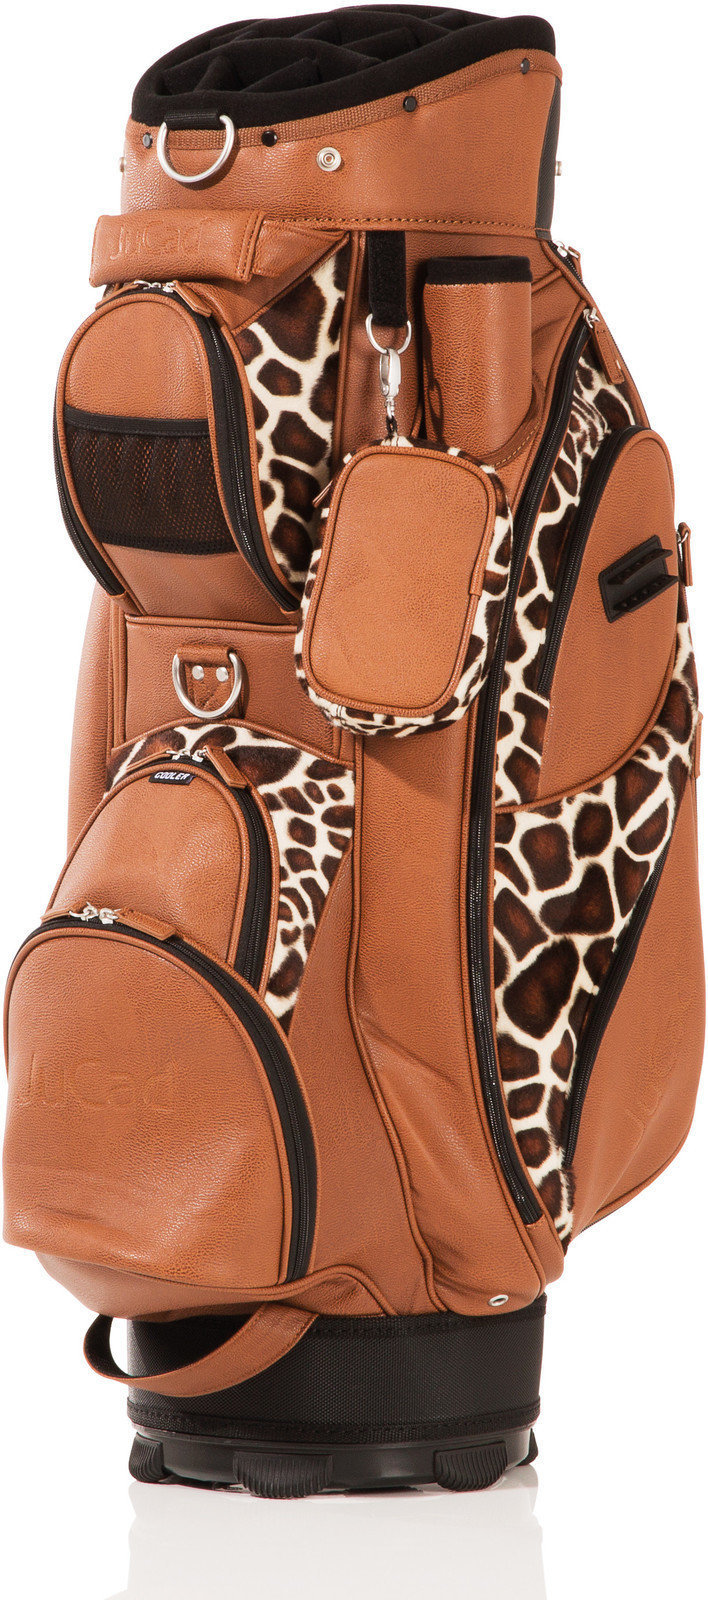 Saco de golfe Jucad Style Brown/Giraffe Saco de golfe